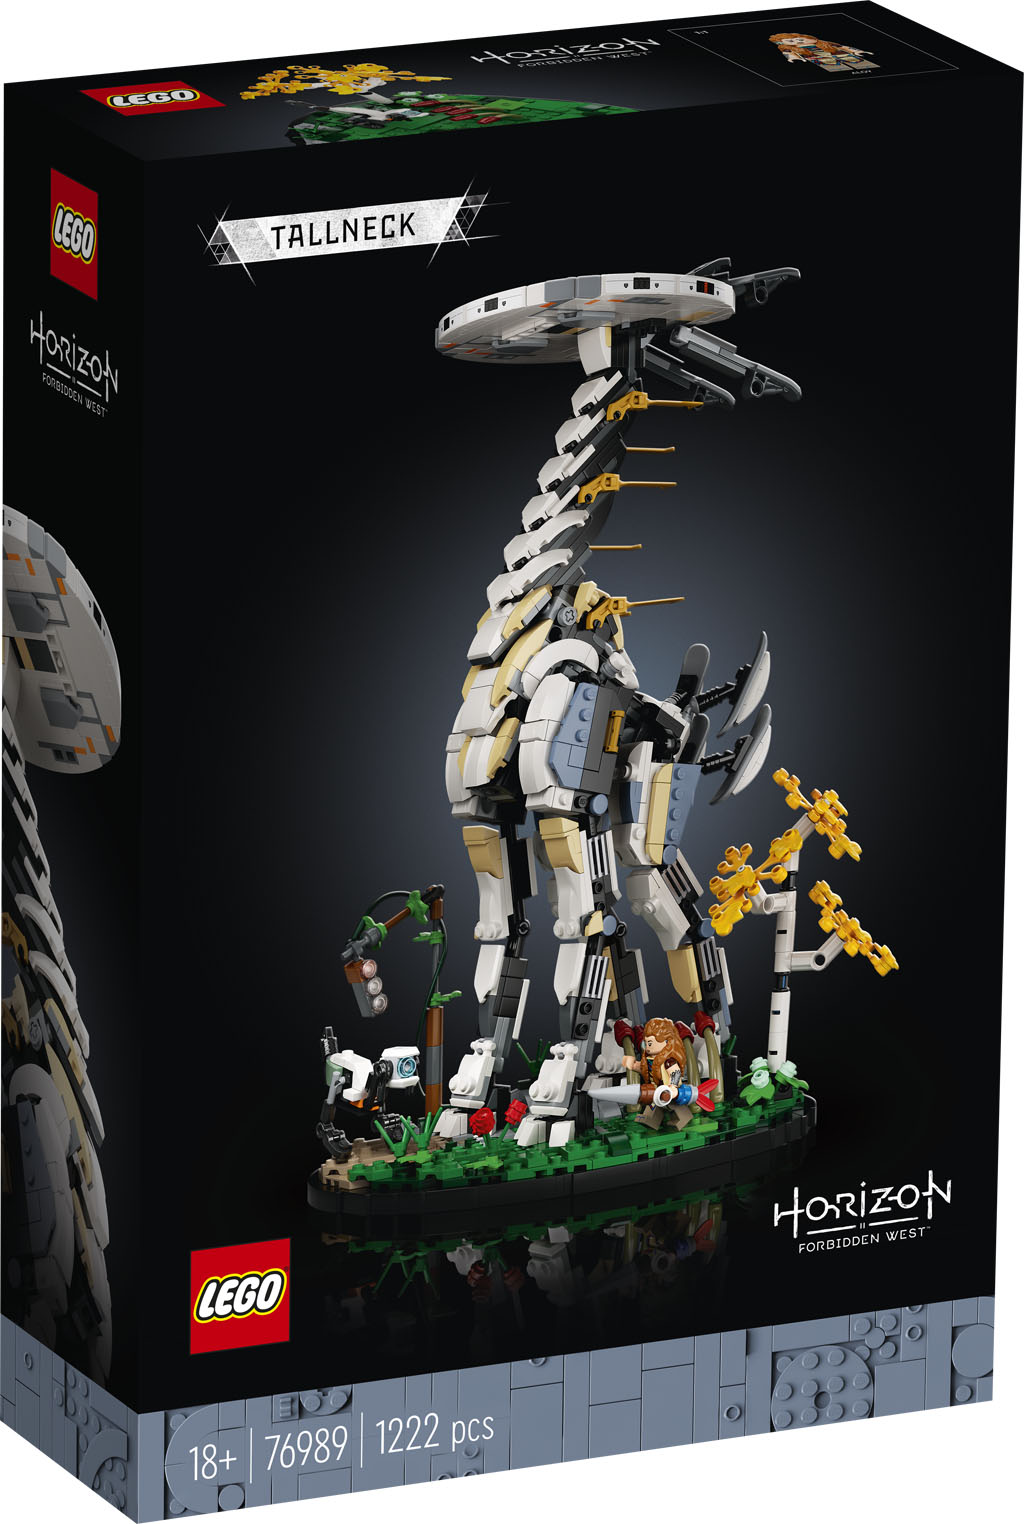 LEGO-Horizon-Forbidden-West-Tallneck-76989-4.jpg